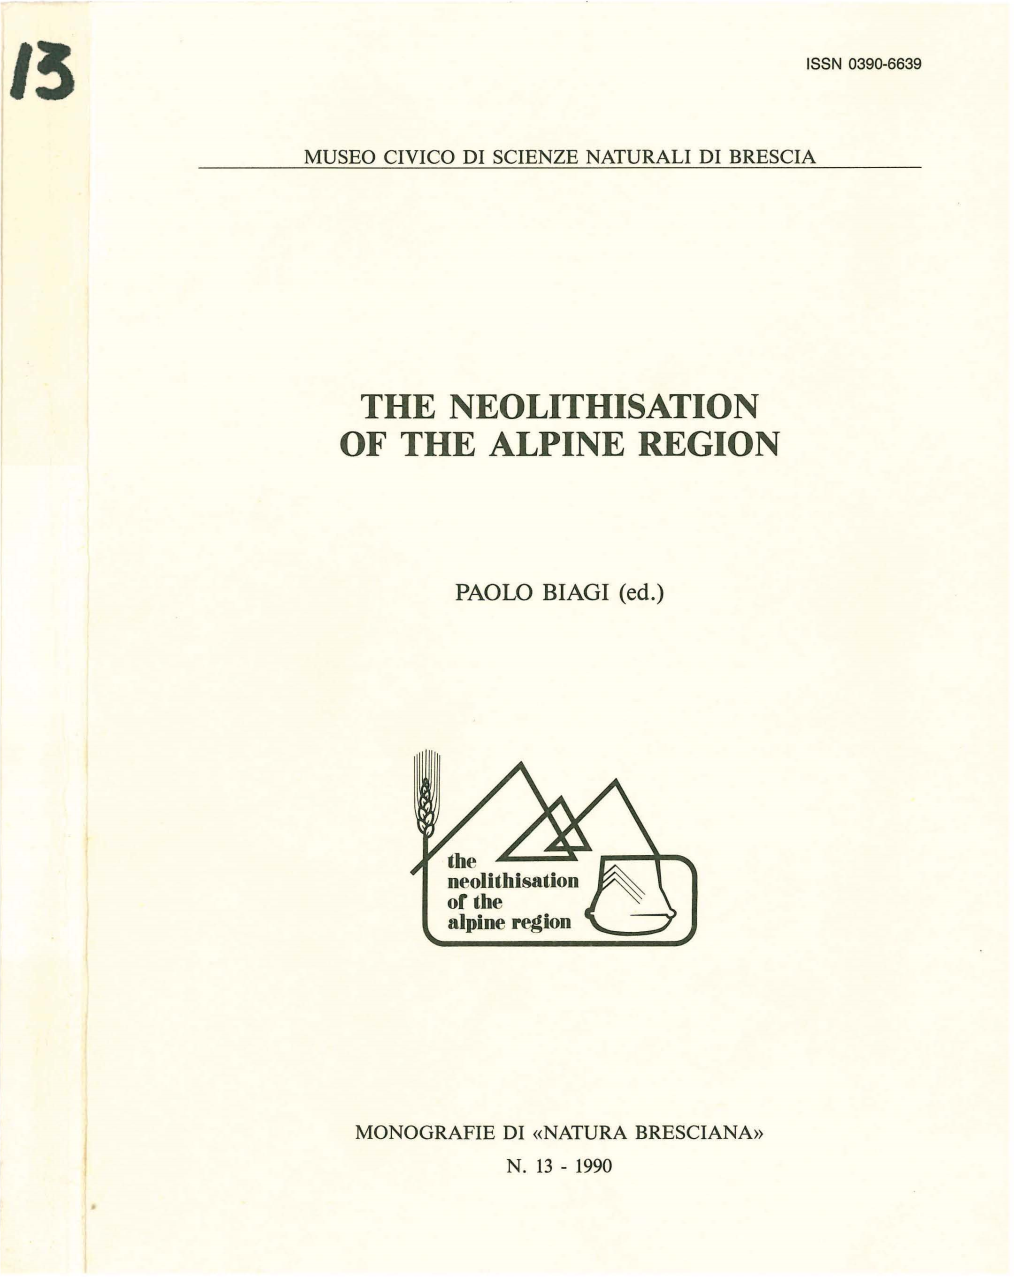 The Neolithisation of the Alpine Region